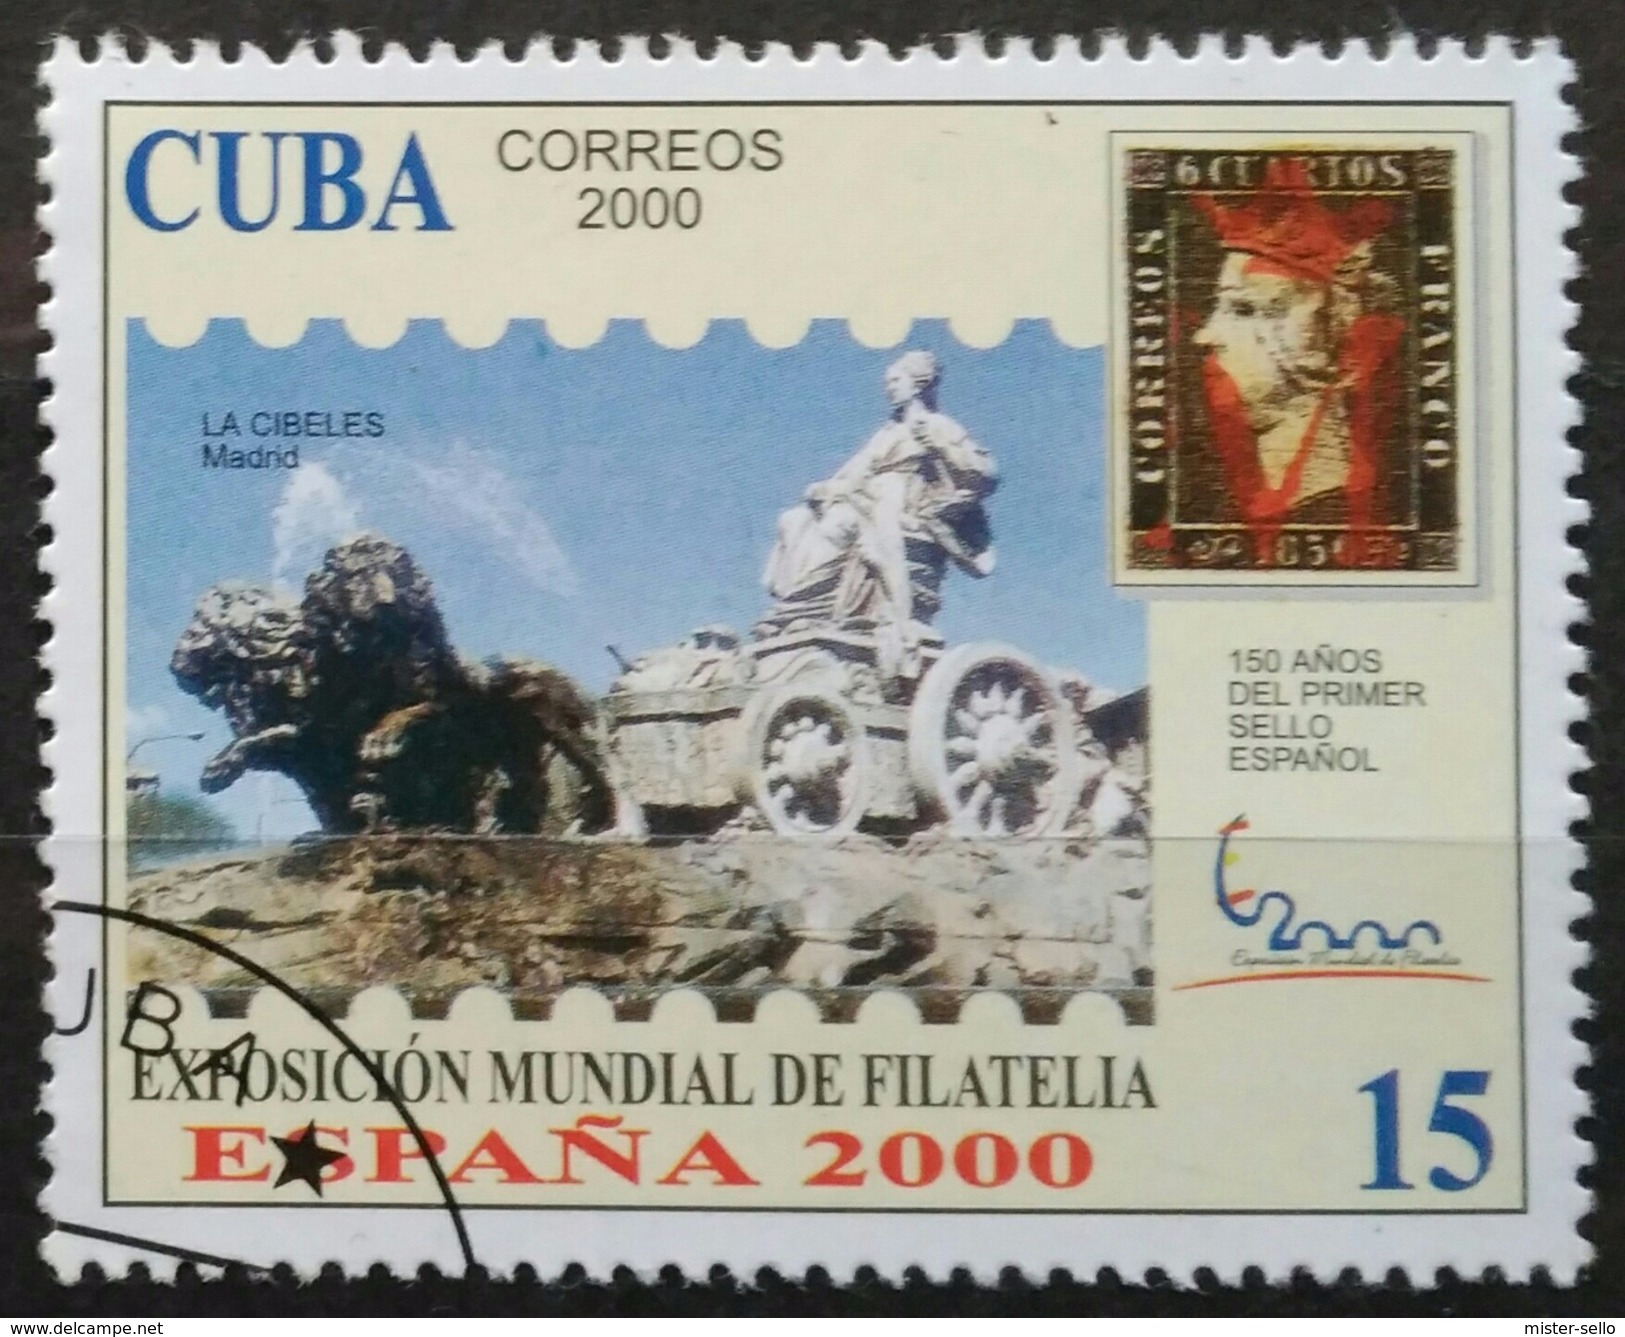 CU BA 2006 2000 World Stamp Exhibition "Espana 2000" - Madrid, Spain. USADO - USED. - Usados